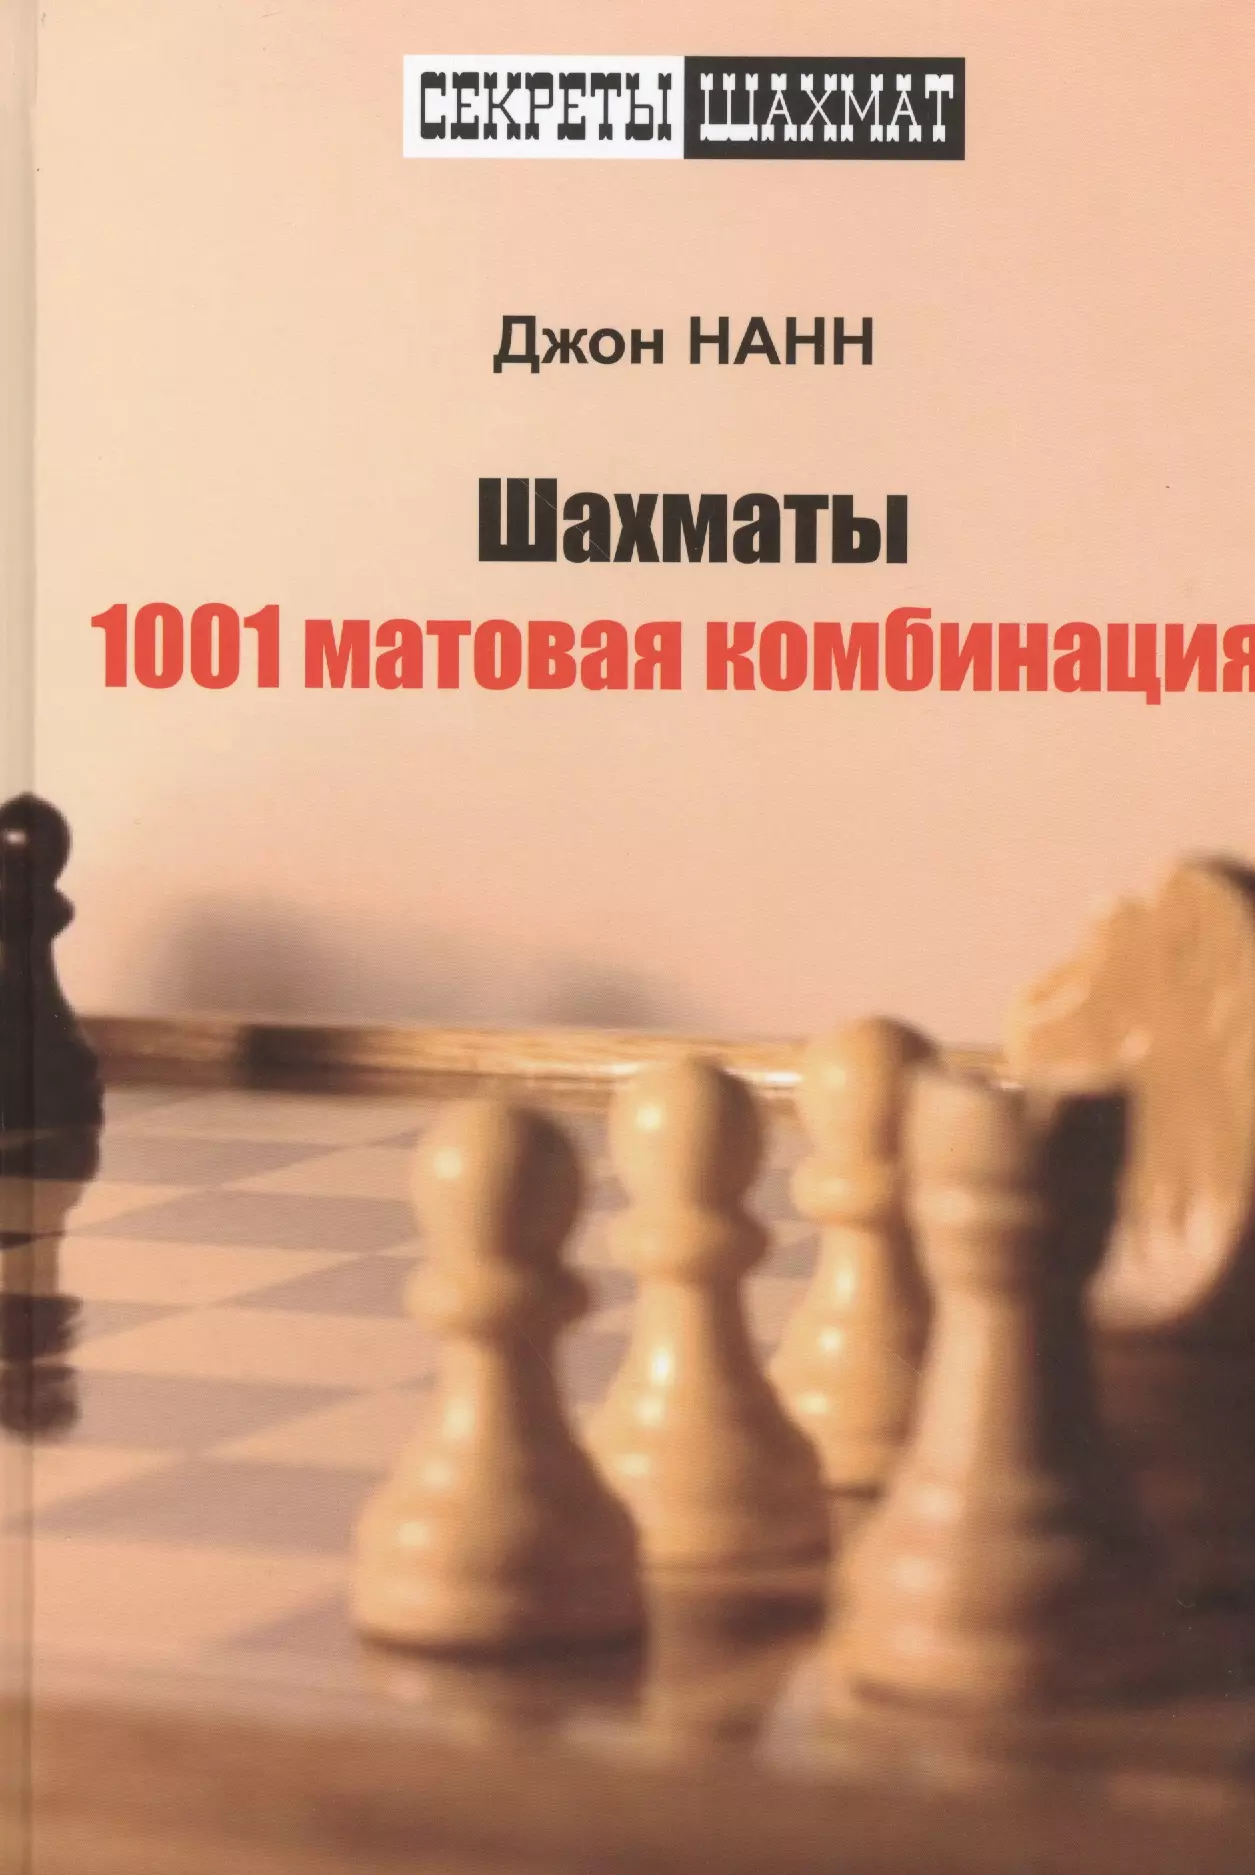 нанн дж шахматы понимание миттельшпиля Нанн Джон Шахматы. 1001 матовая комбинация